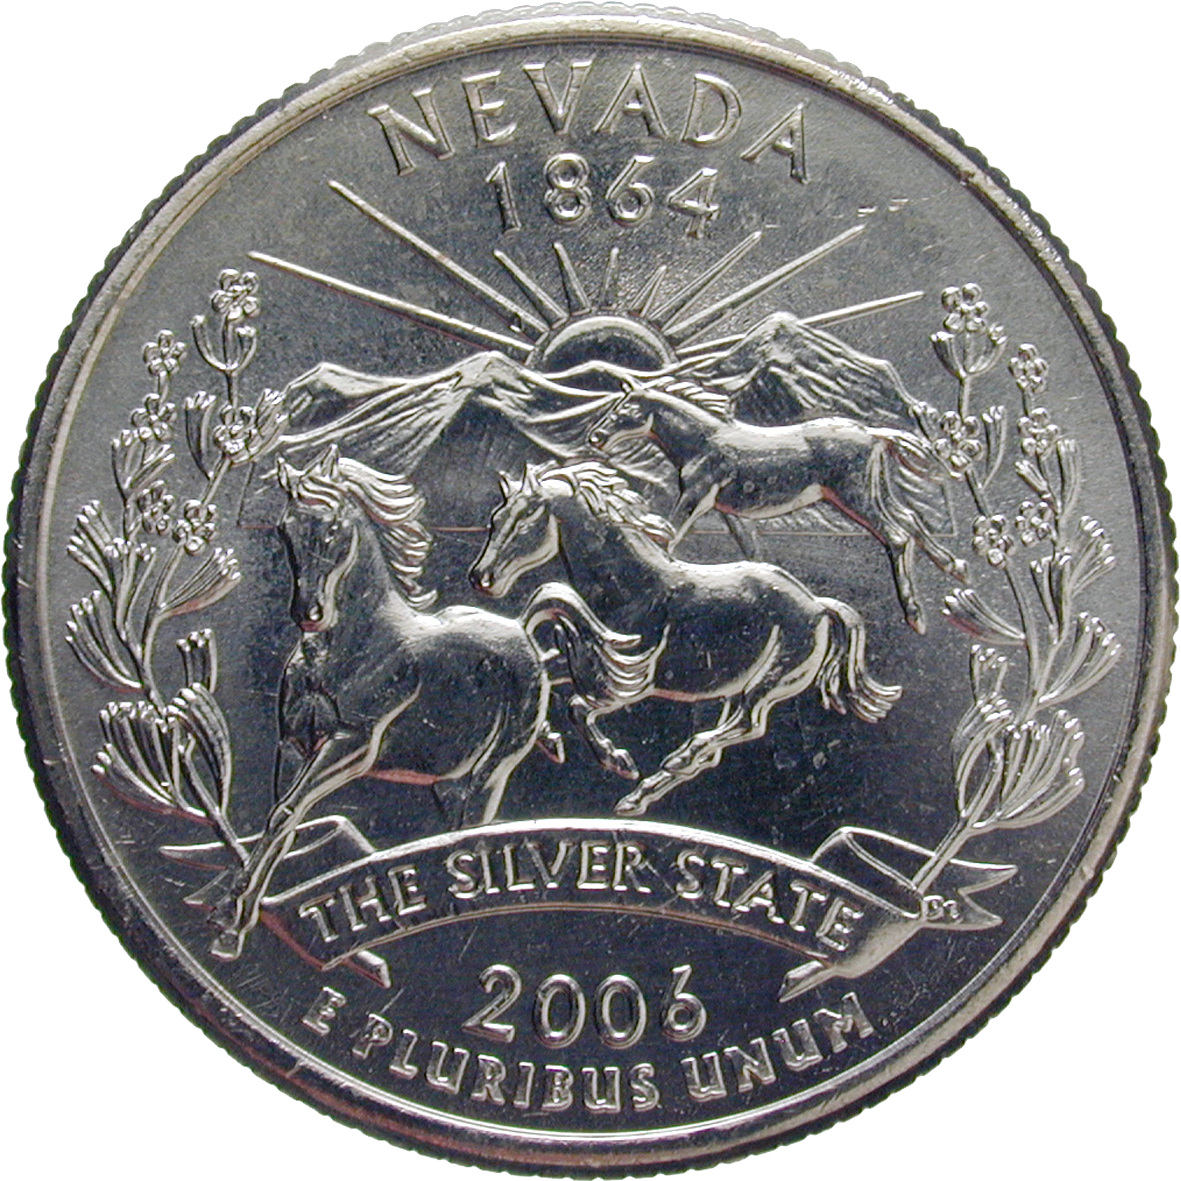 United States of America, Quarter Dollar 2006 (reverse)